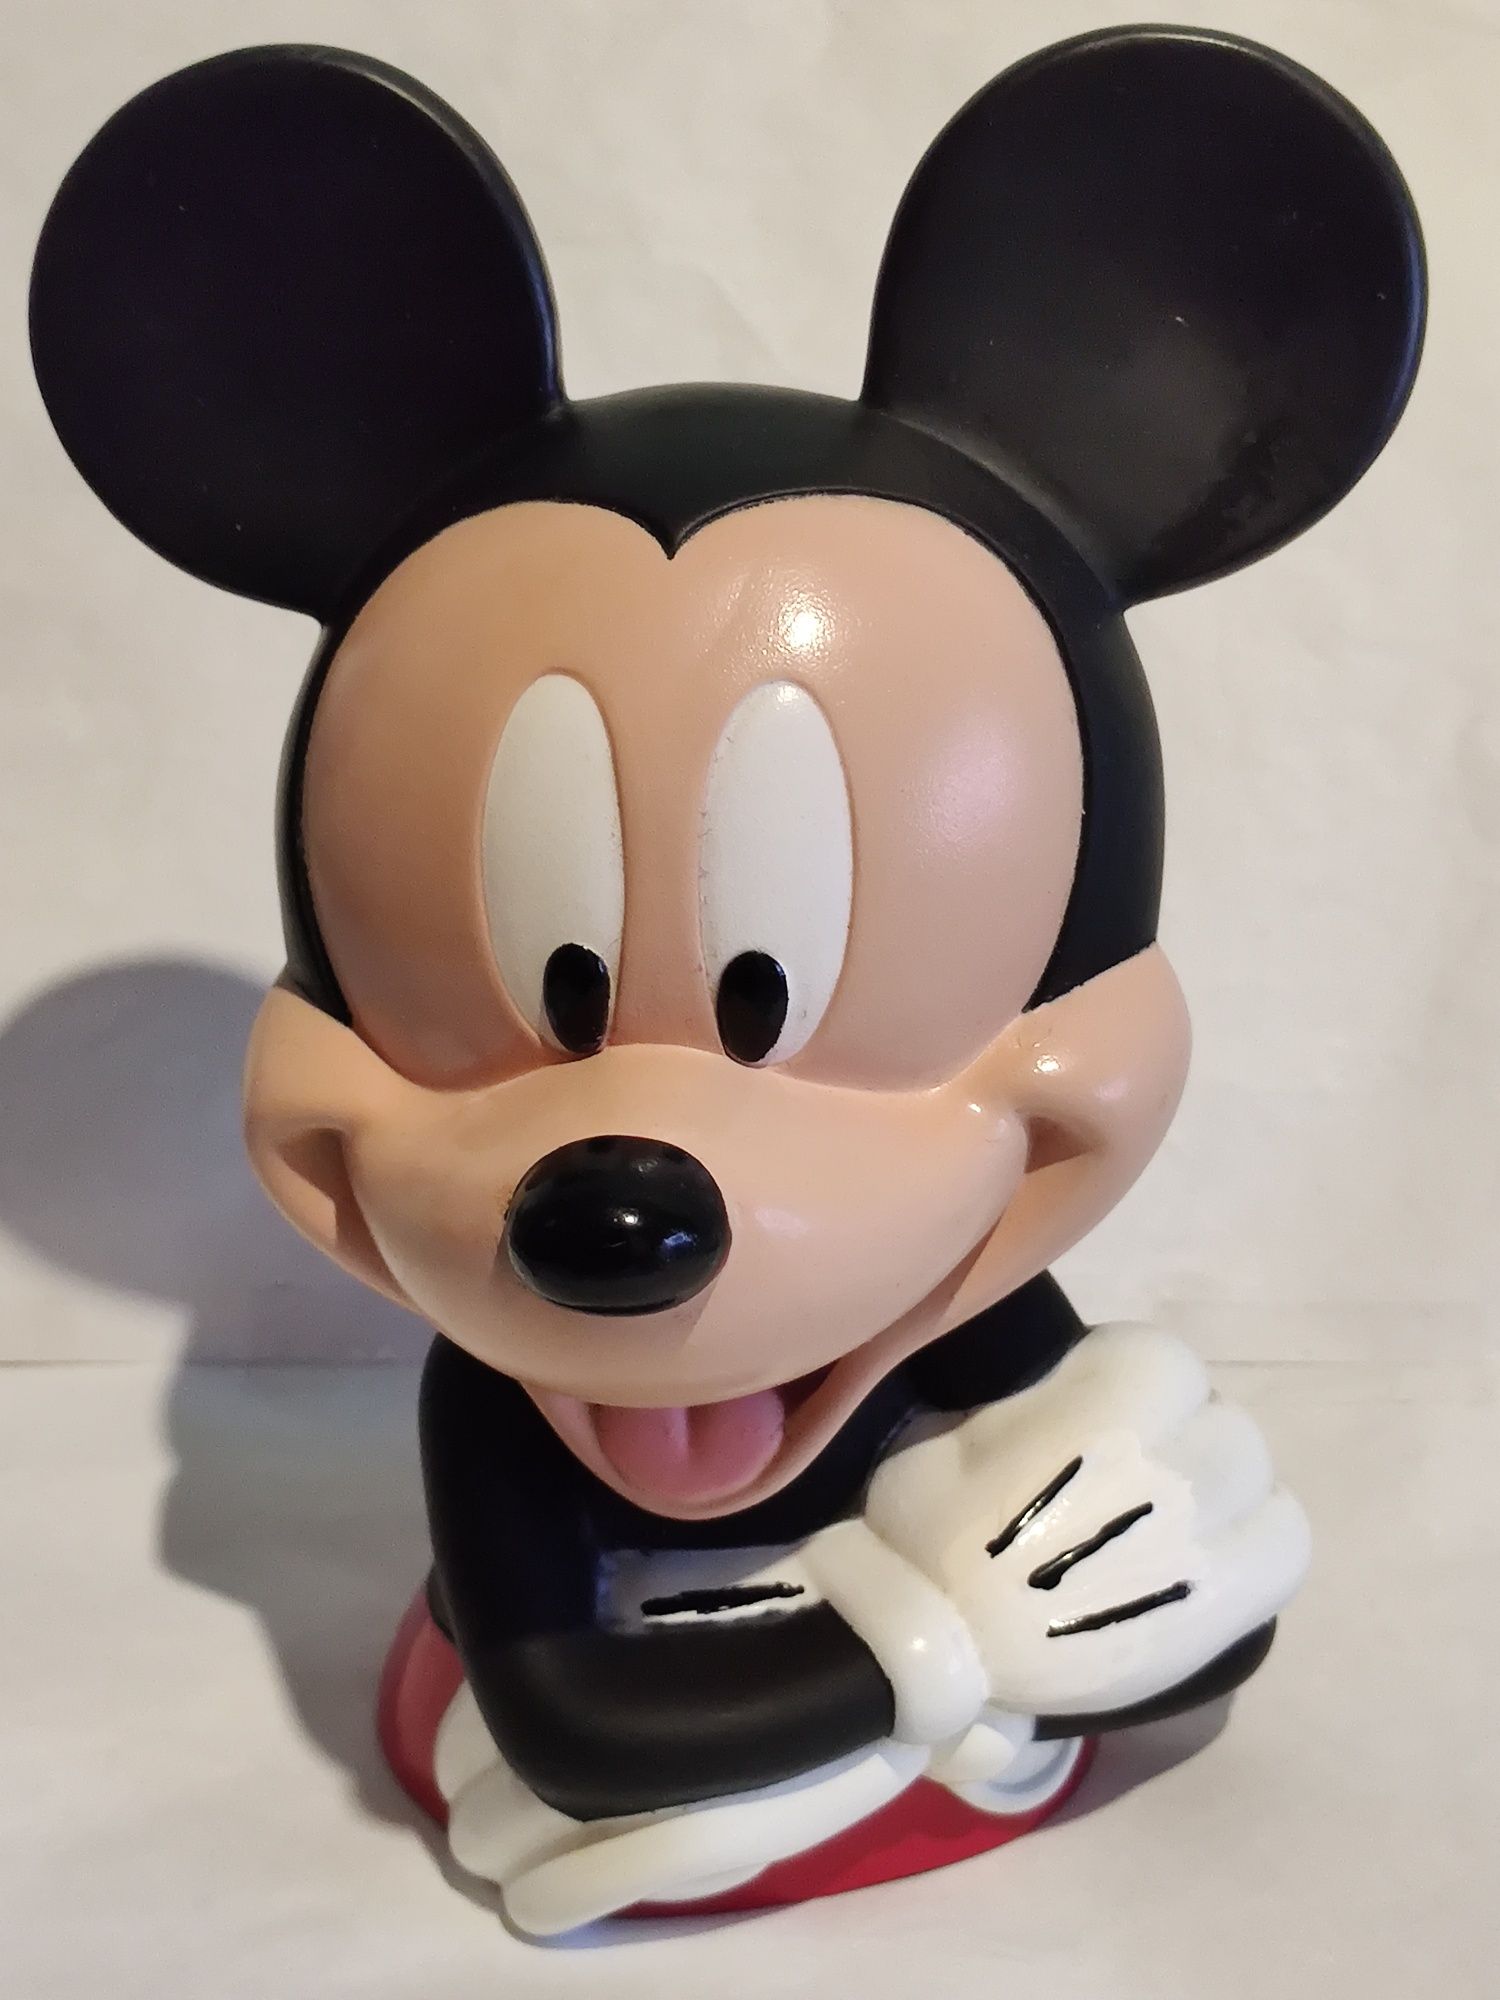 Mealheiro da Disney do Mickey mouse